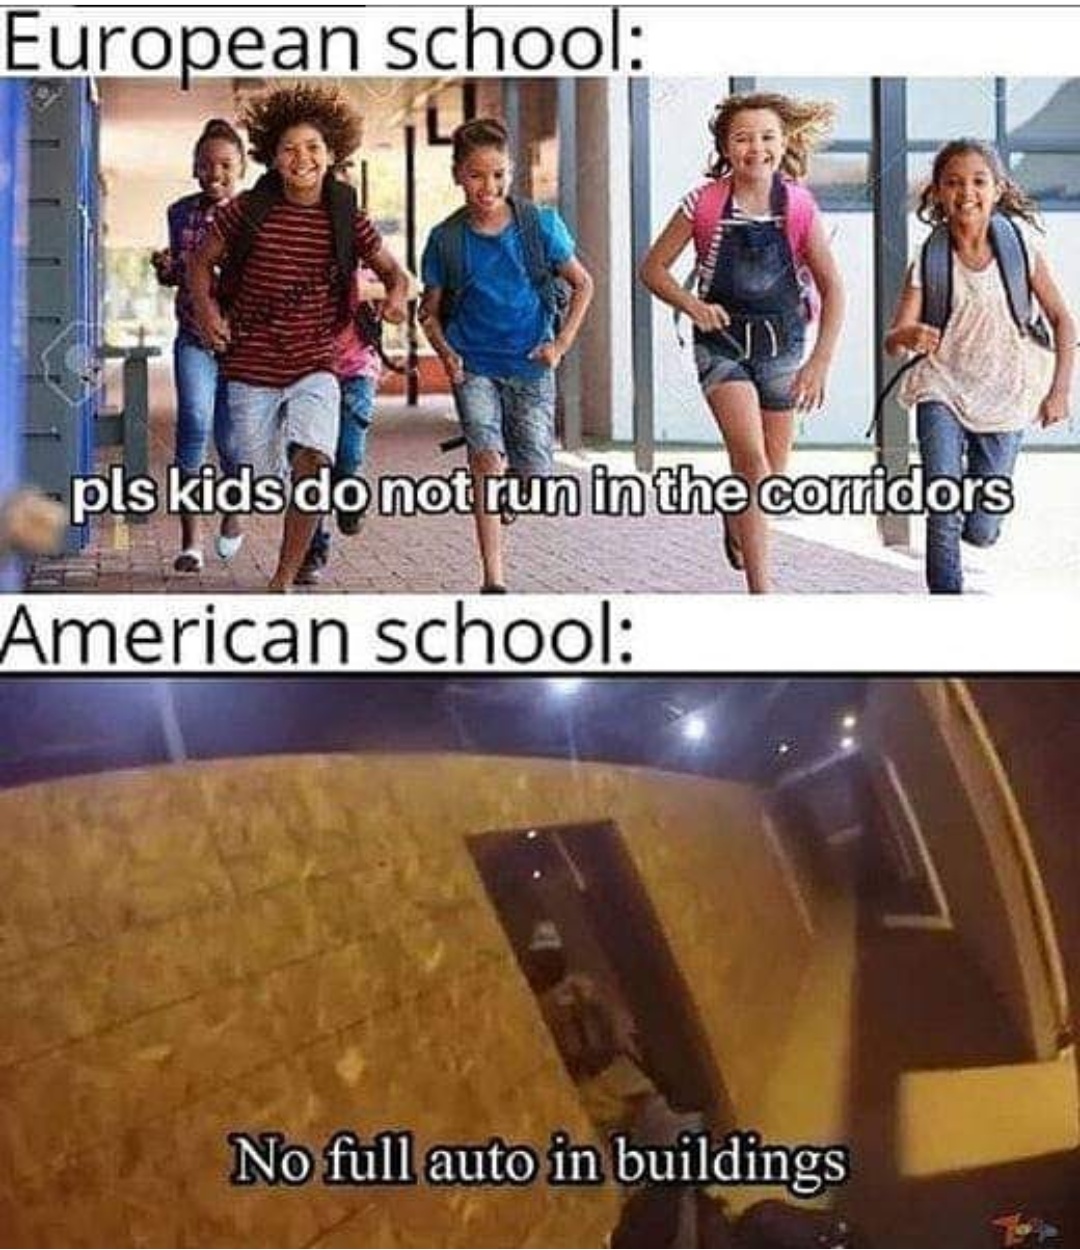 no full auto in buildings meme - European school pls kids do not run in the corridors American school No full auto in buildings